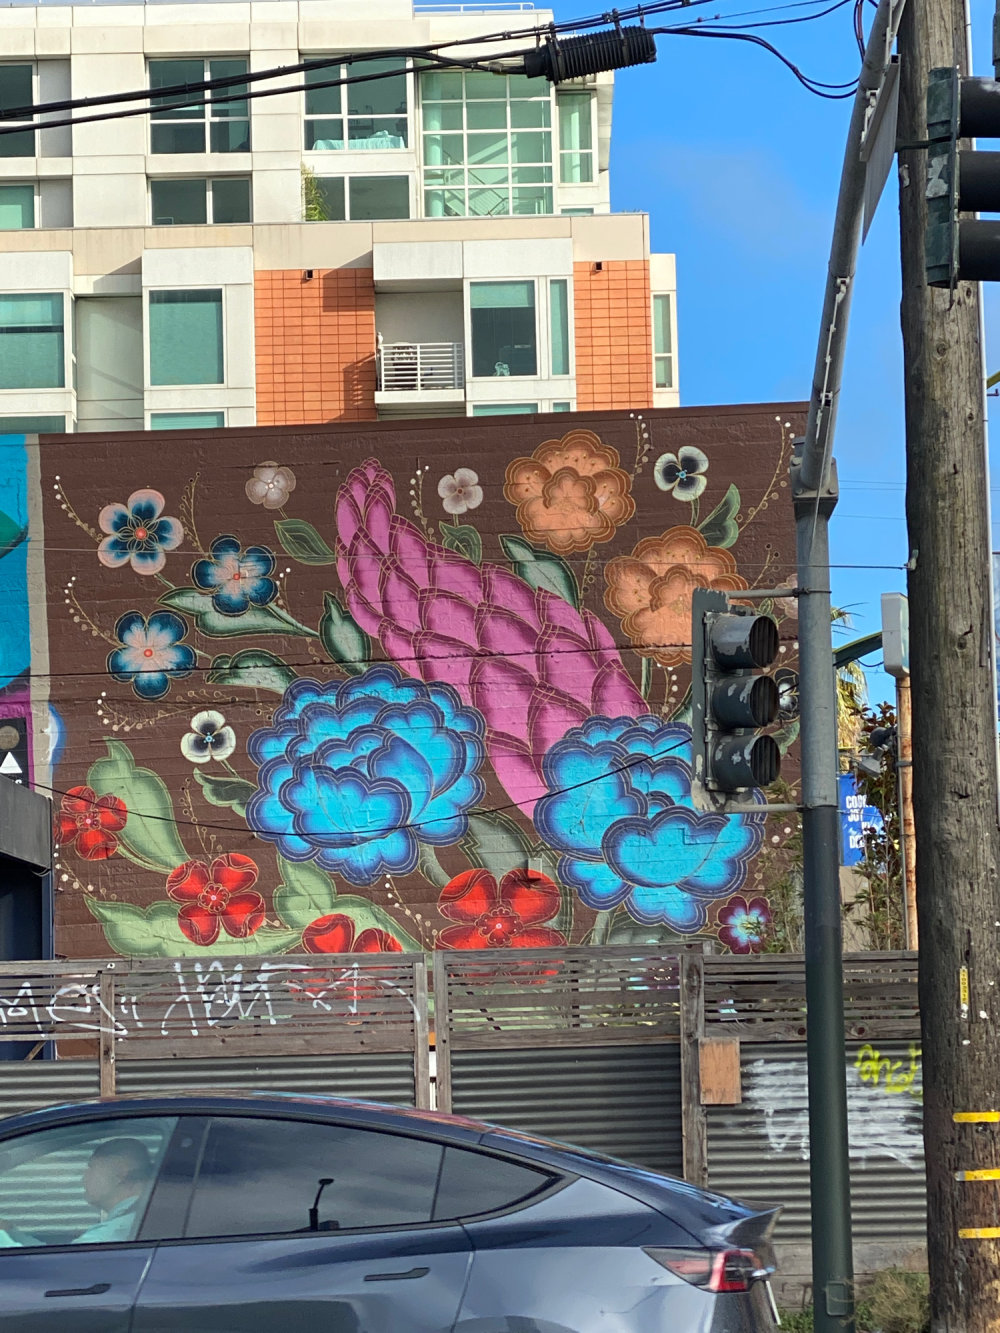 mural in San Francisco by artist Jet Martinez.